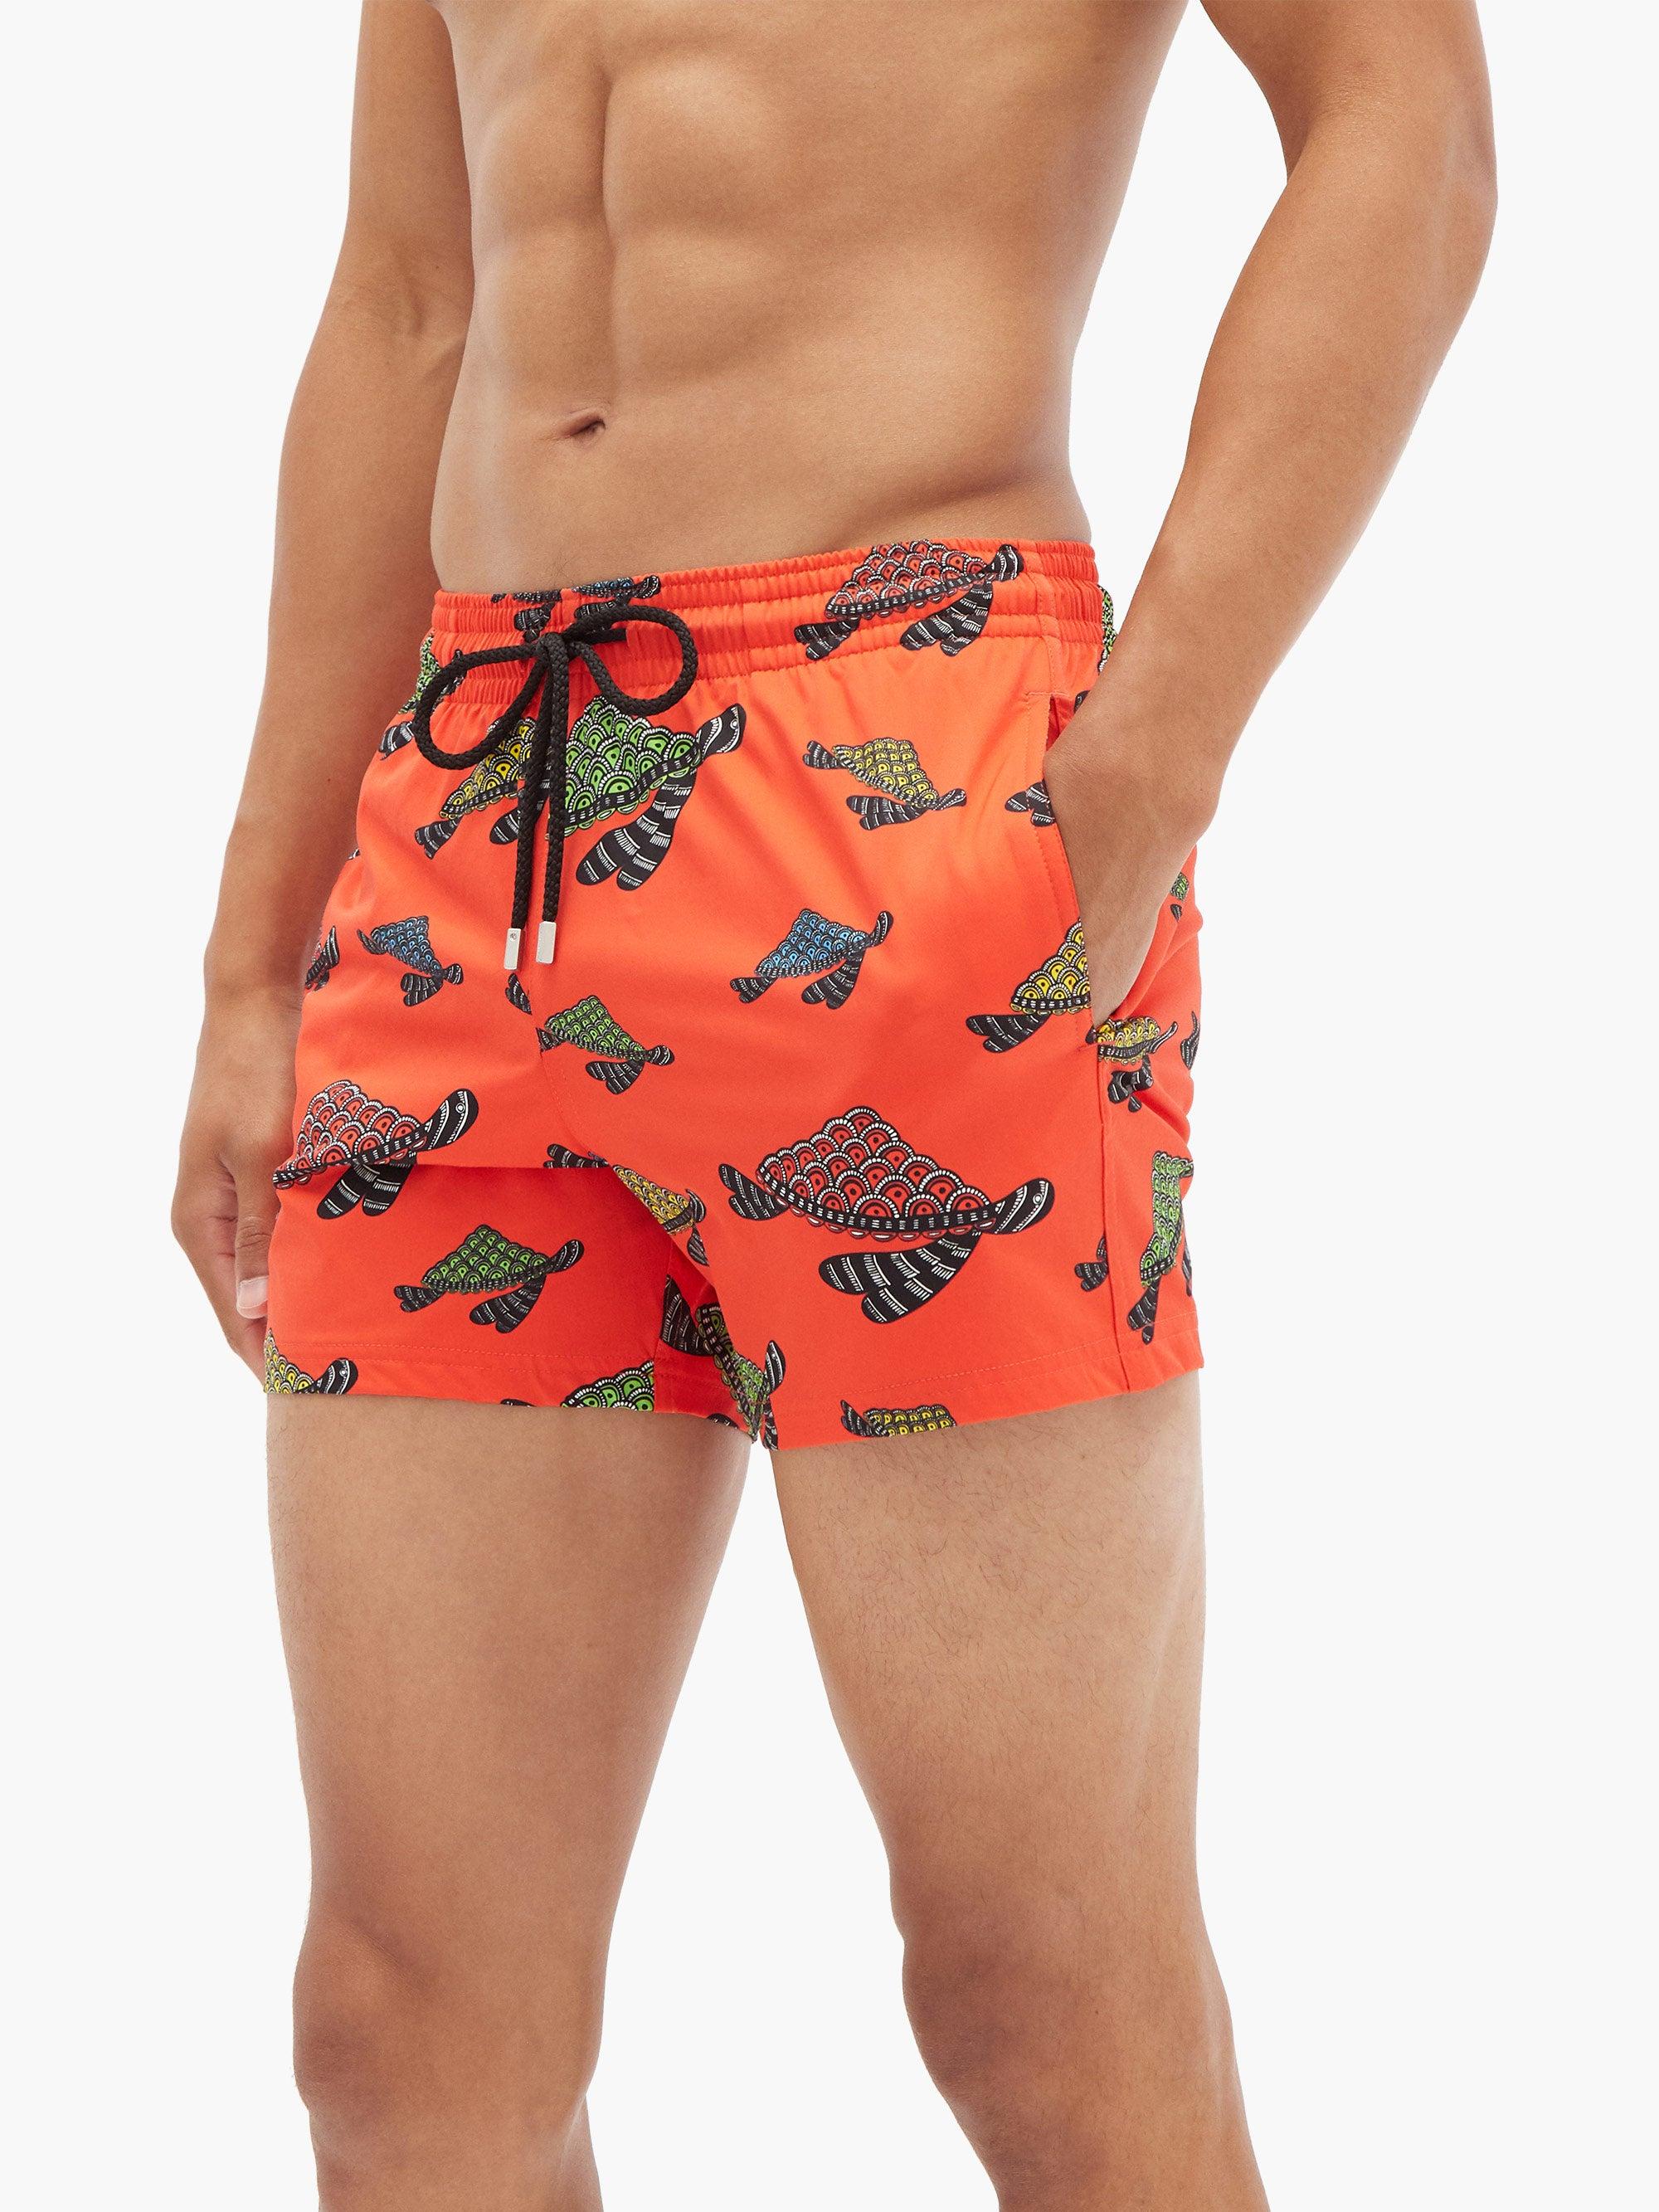 Vilebrequin Moorise Turtle-print Swim Shorts in Orange for Men - Lyst